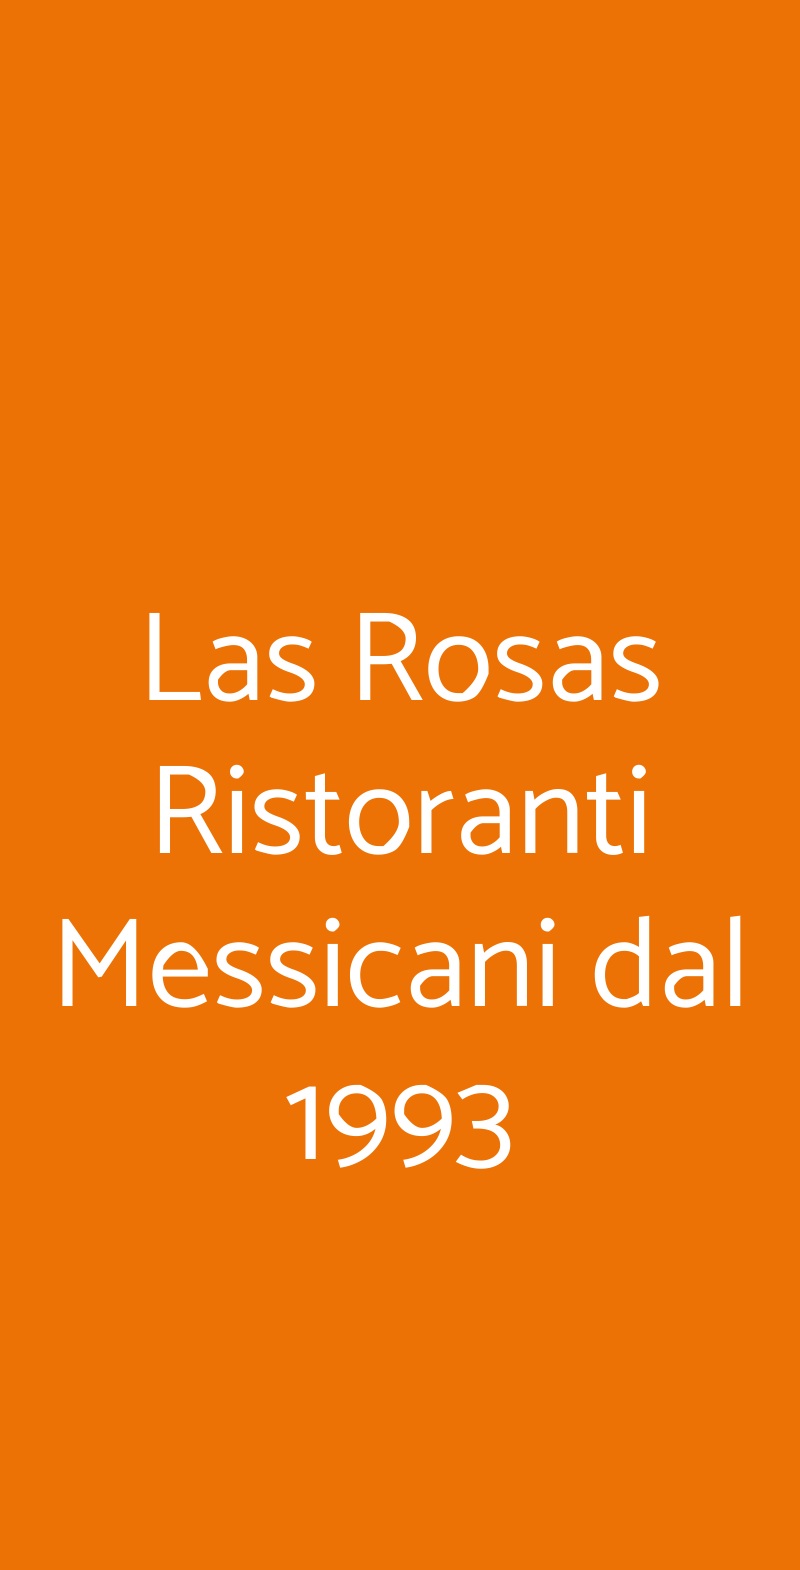 Las Rosas Ristoranti Messicani dal 1993 Torino menù 1 pagina